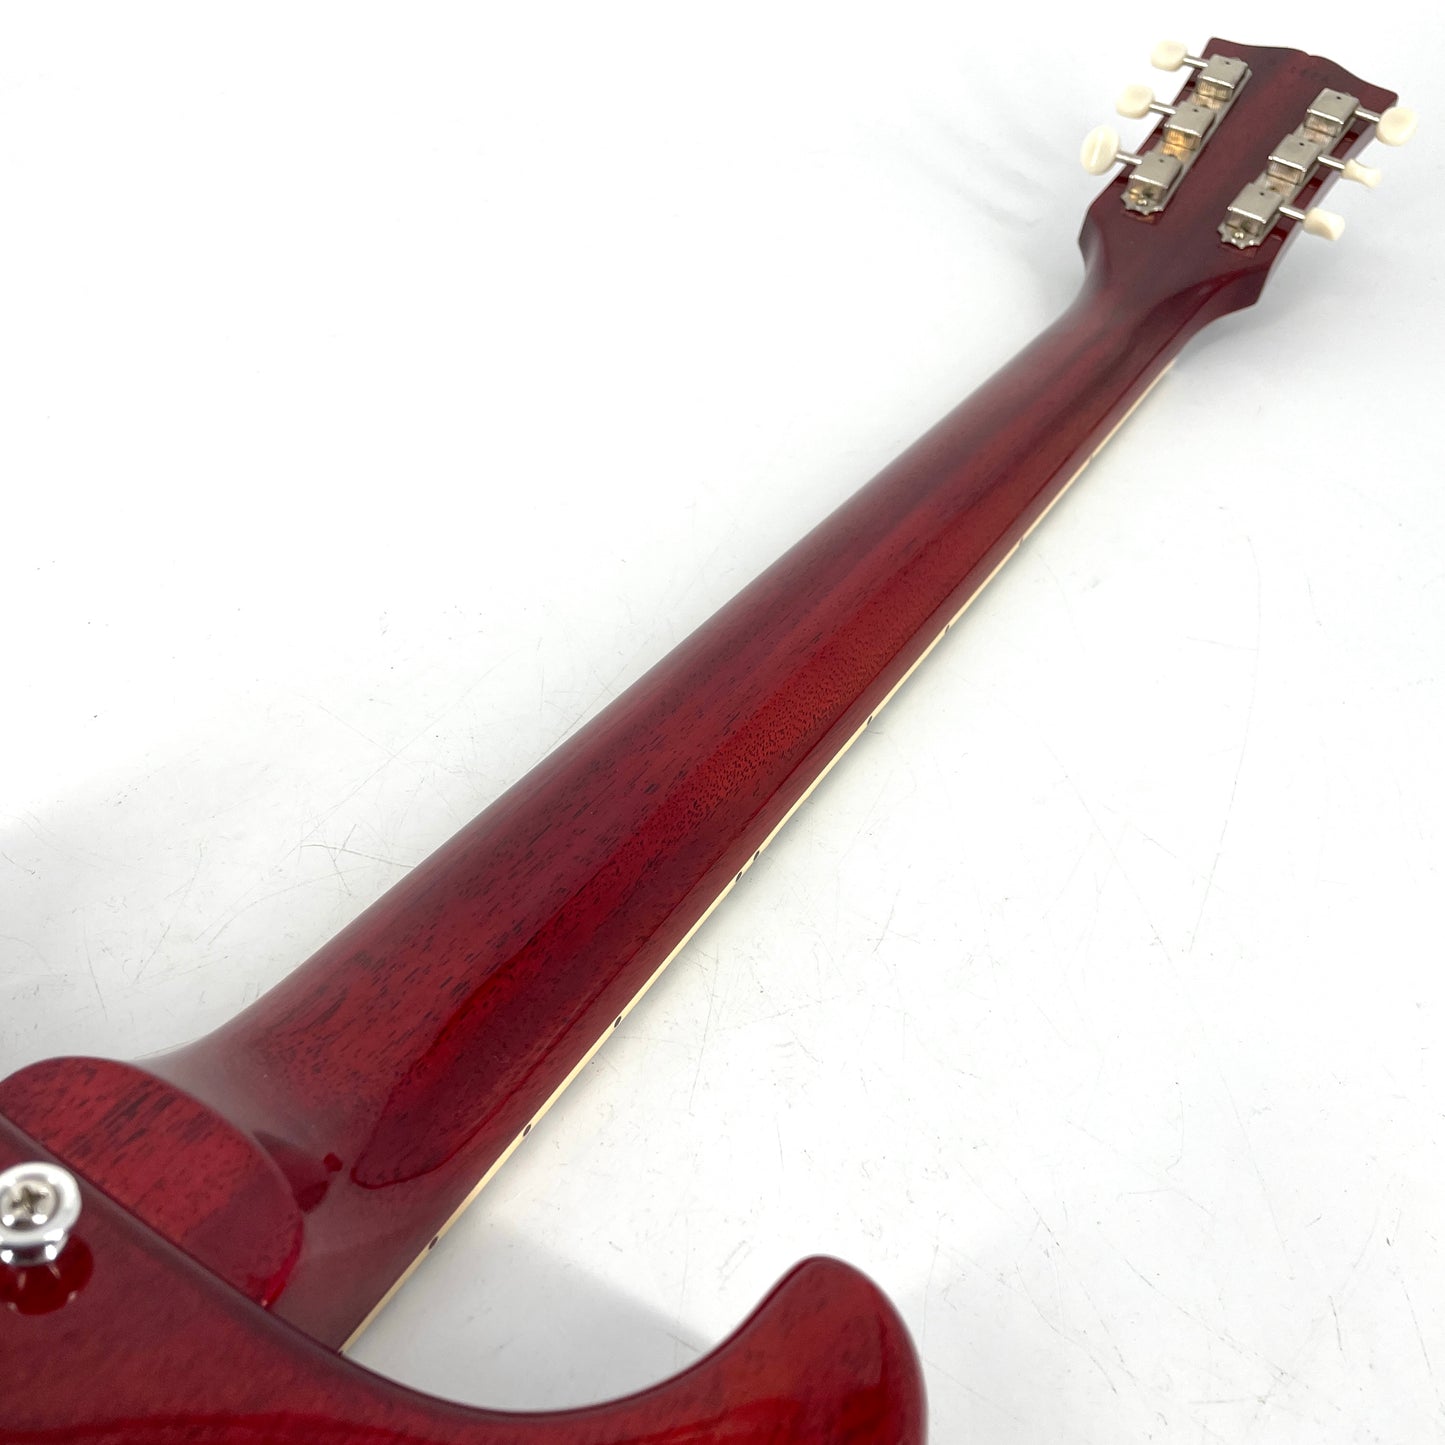 2011 Gibson Custom Shop Les Paul Special DC 1960 Reissue VOS – Cherry